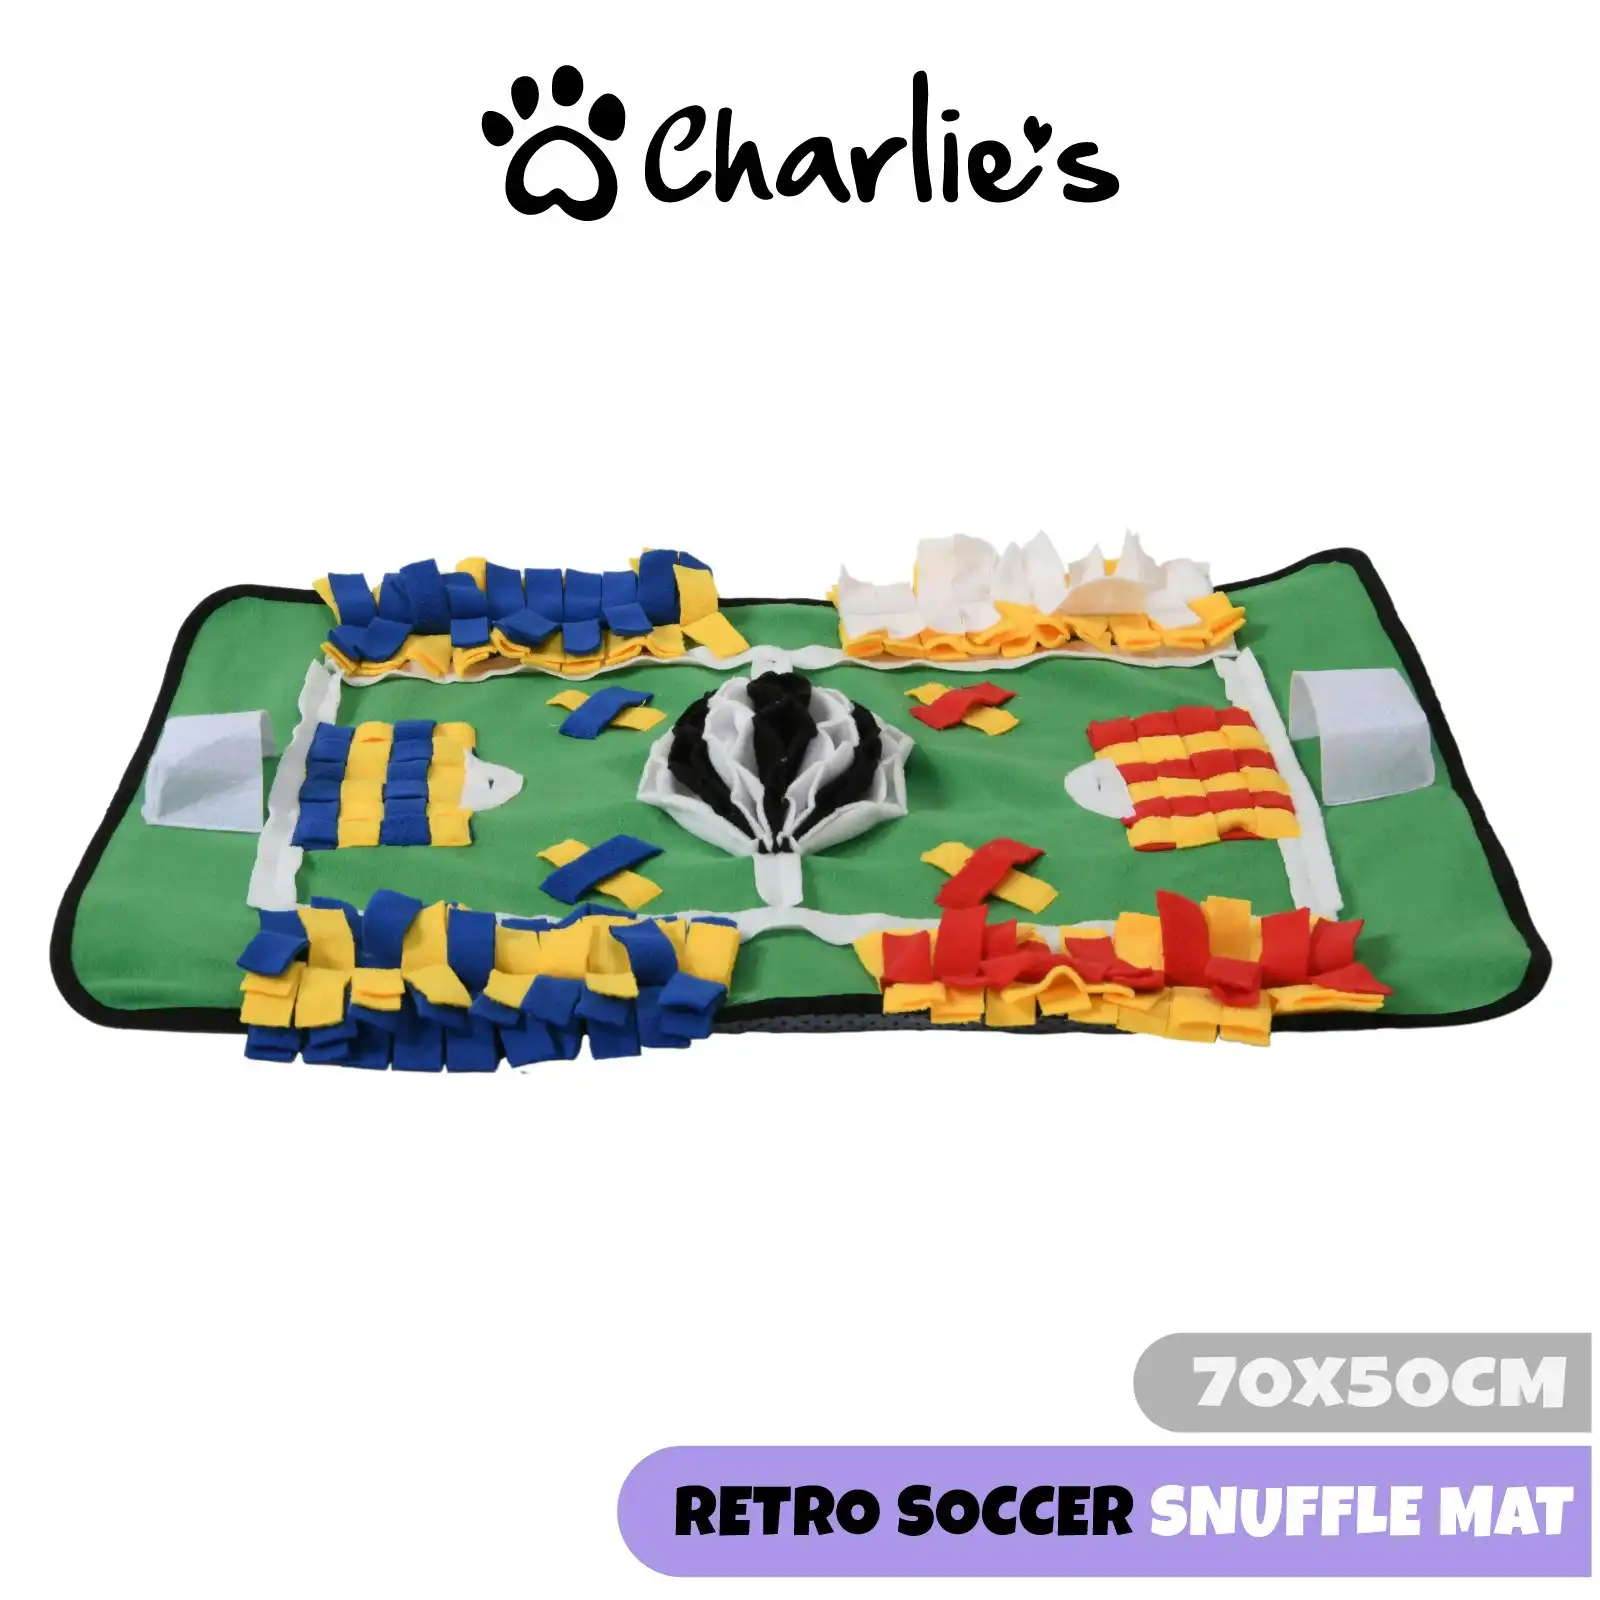 Charlie's Retro Soccer Snuffle Mat 70x50cm